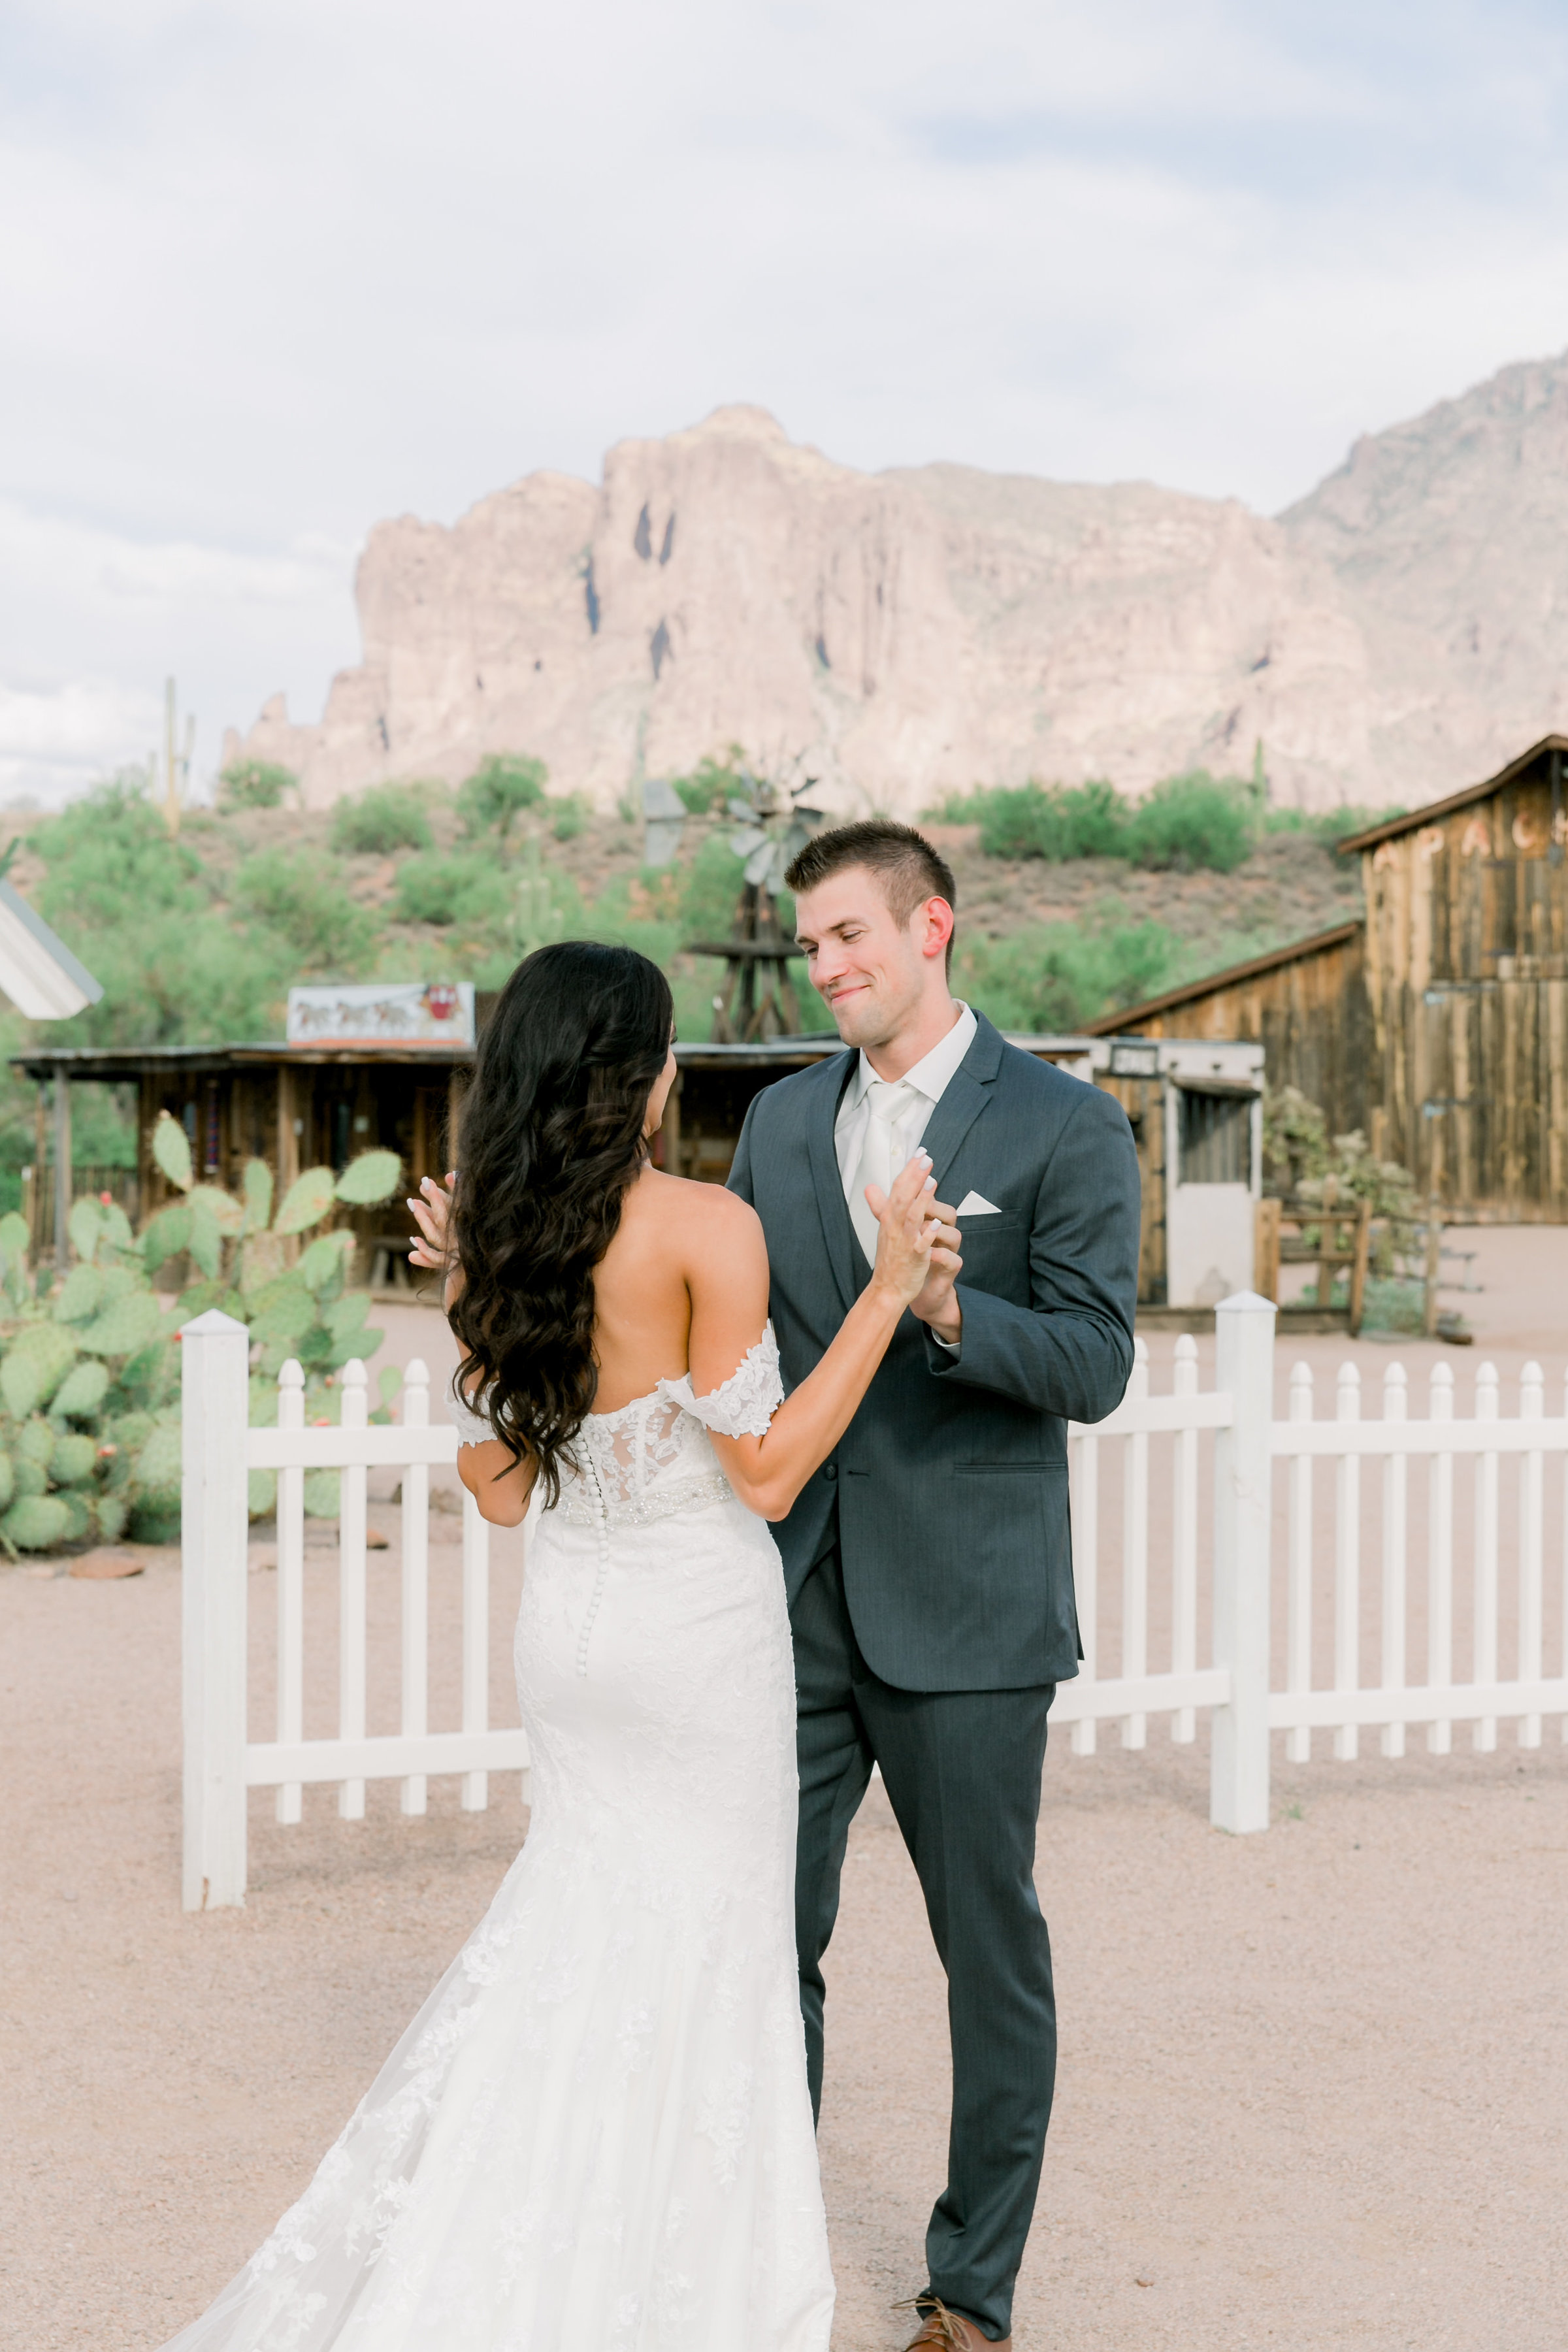 Karlie Colleen Photography - Arizona Wedding - The Paseo Venue - Jackie & Ryan -86